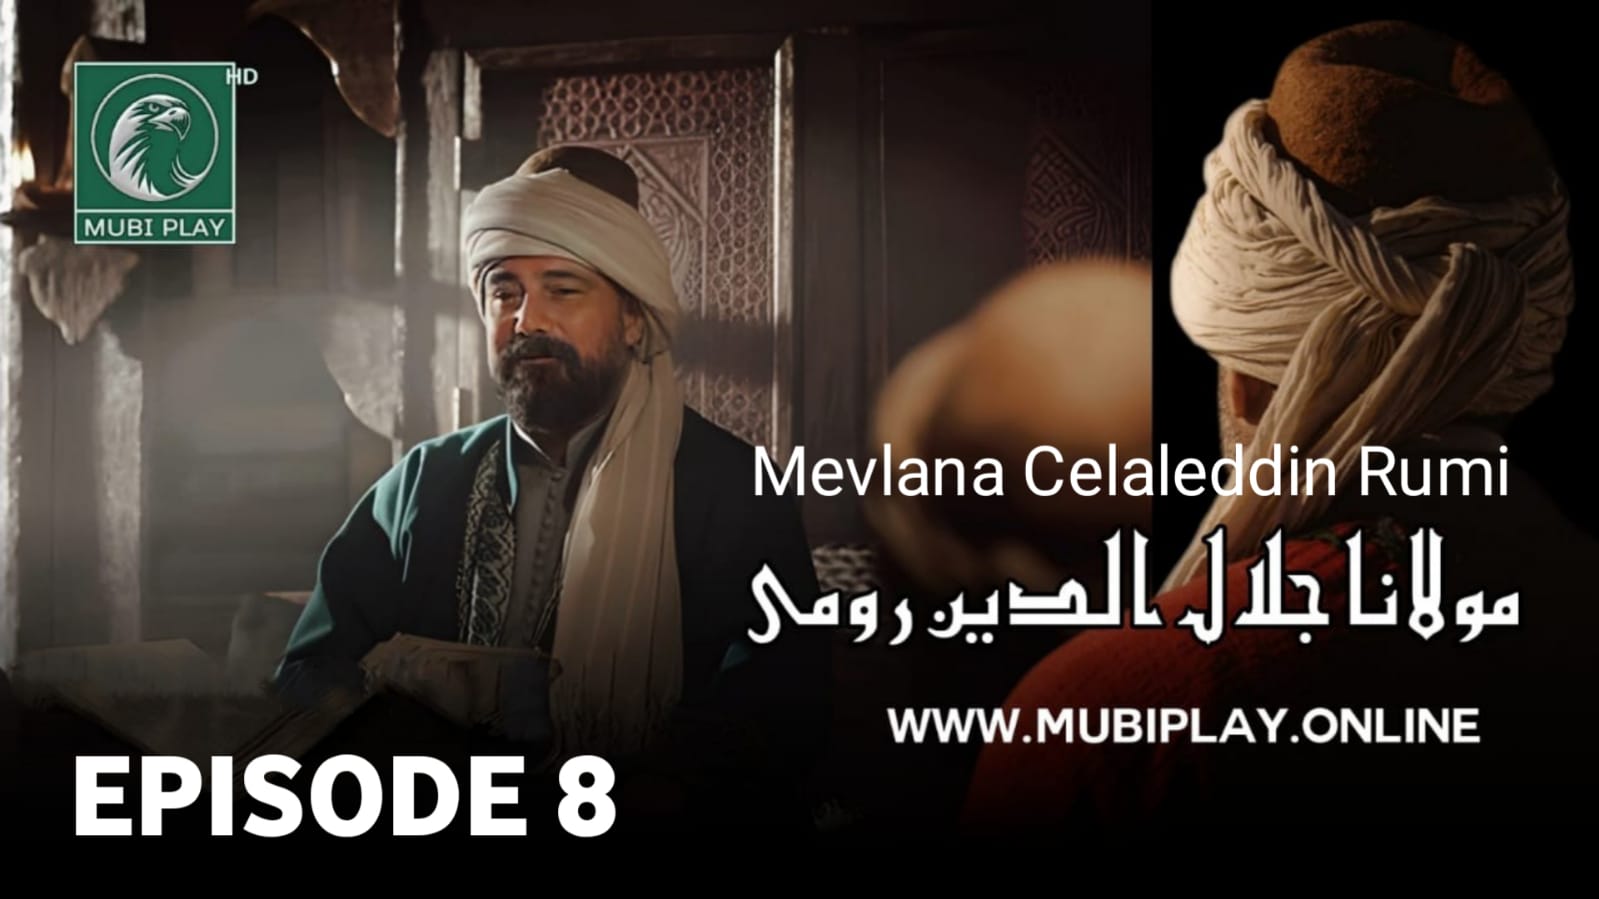 Mevlana Celaleddin Rumi Episode 8 with Urdu & English Subtitles by MubiPlay